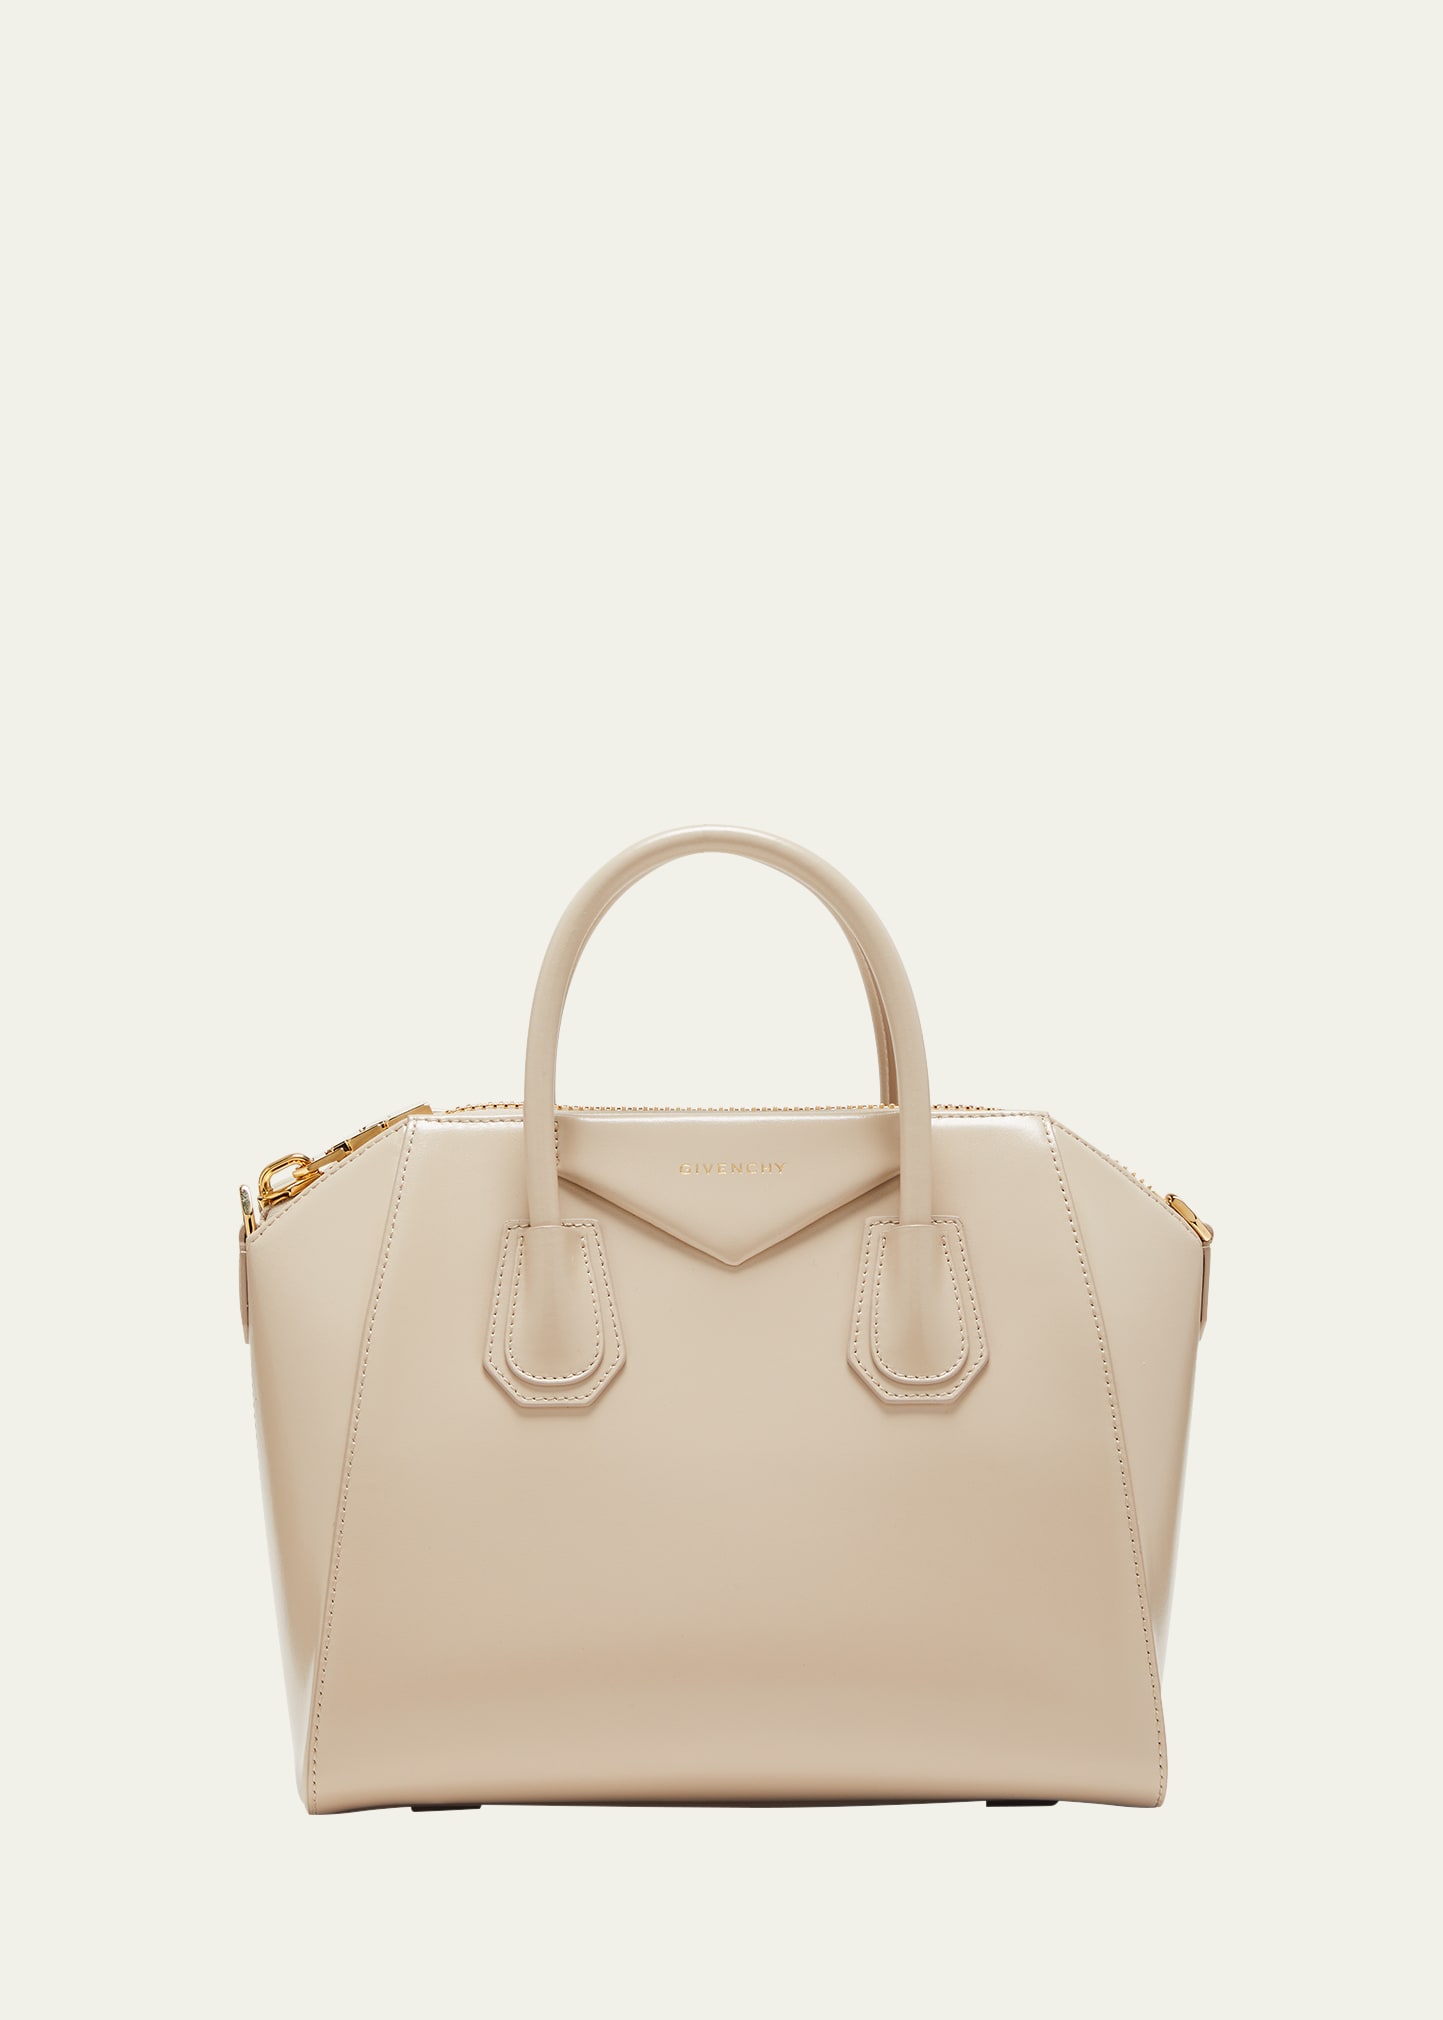 Givenchy Small Antigona Top-Handle Bag in Box Leather - Bergdorf Goodman